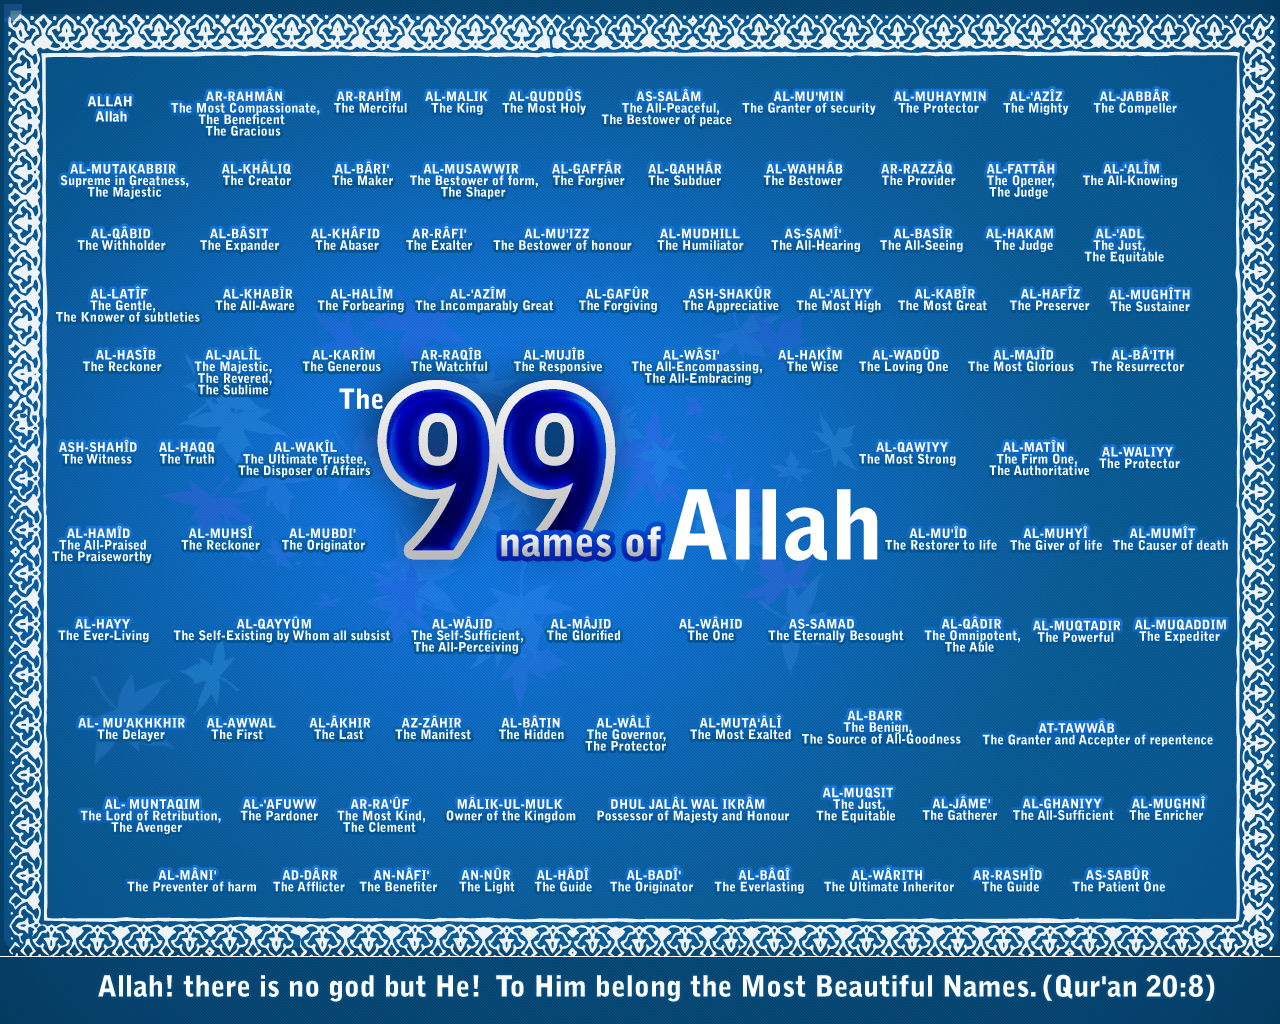 cool wallpapers: 99 names of allah wallpapers